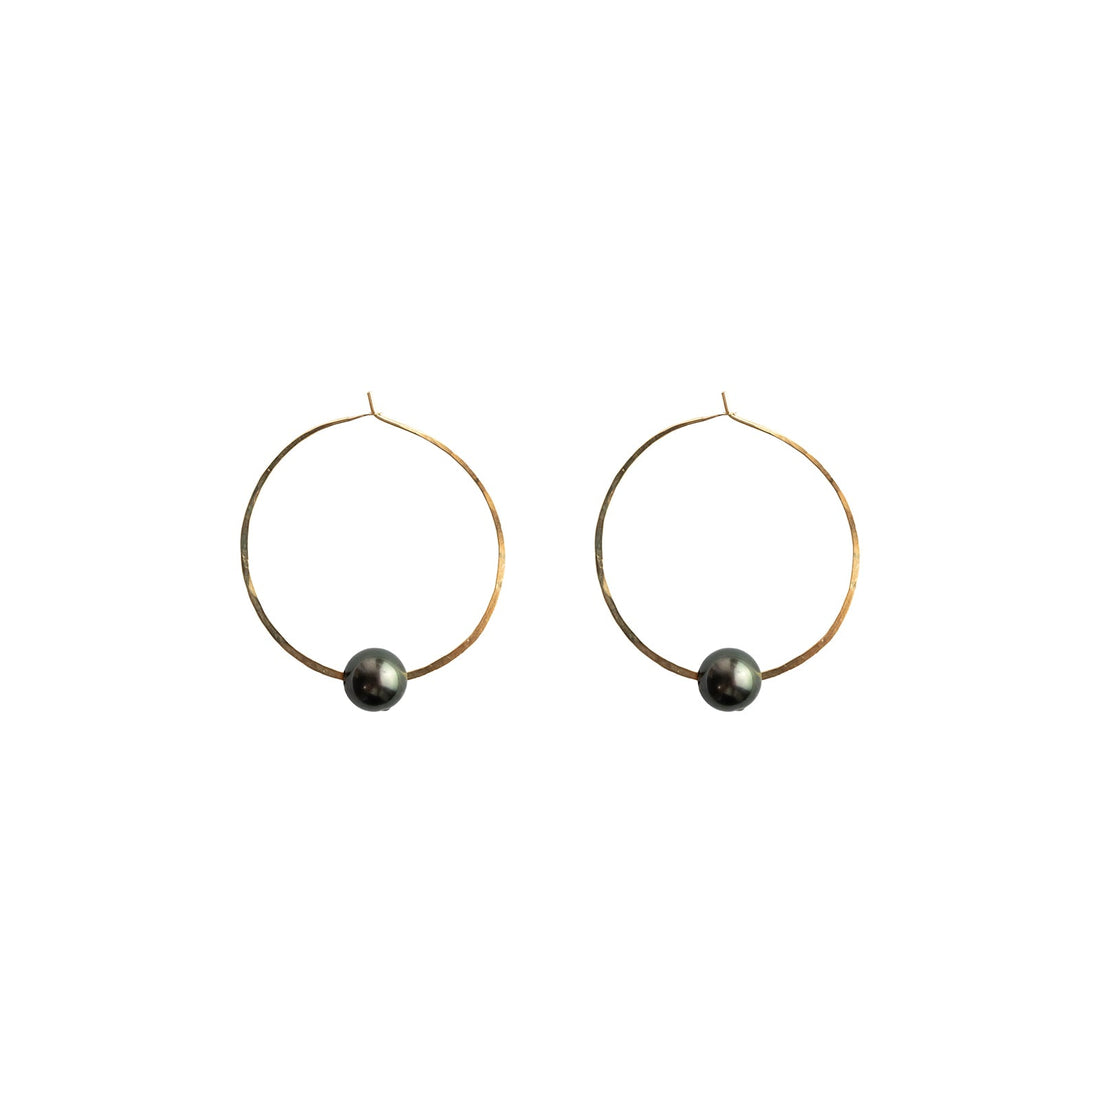 Kasia Earrings, 2" Gold Fill Hoop and Tahitian Black Pearl Earrings Sayulita Sol 